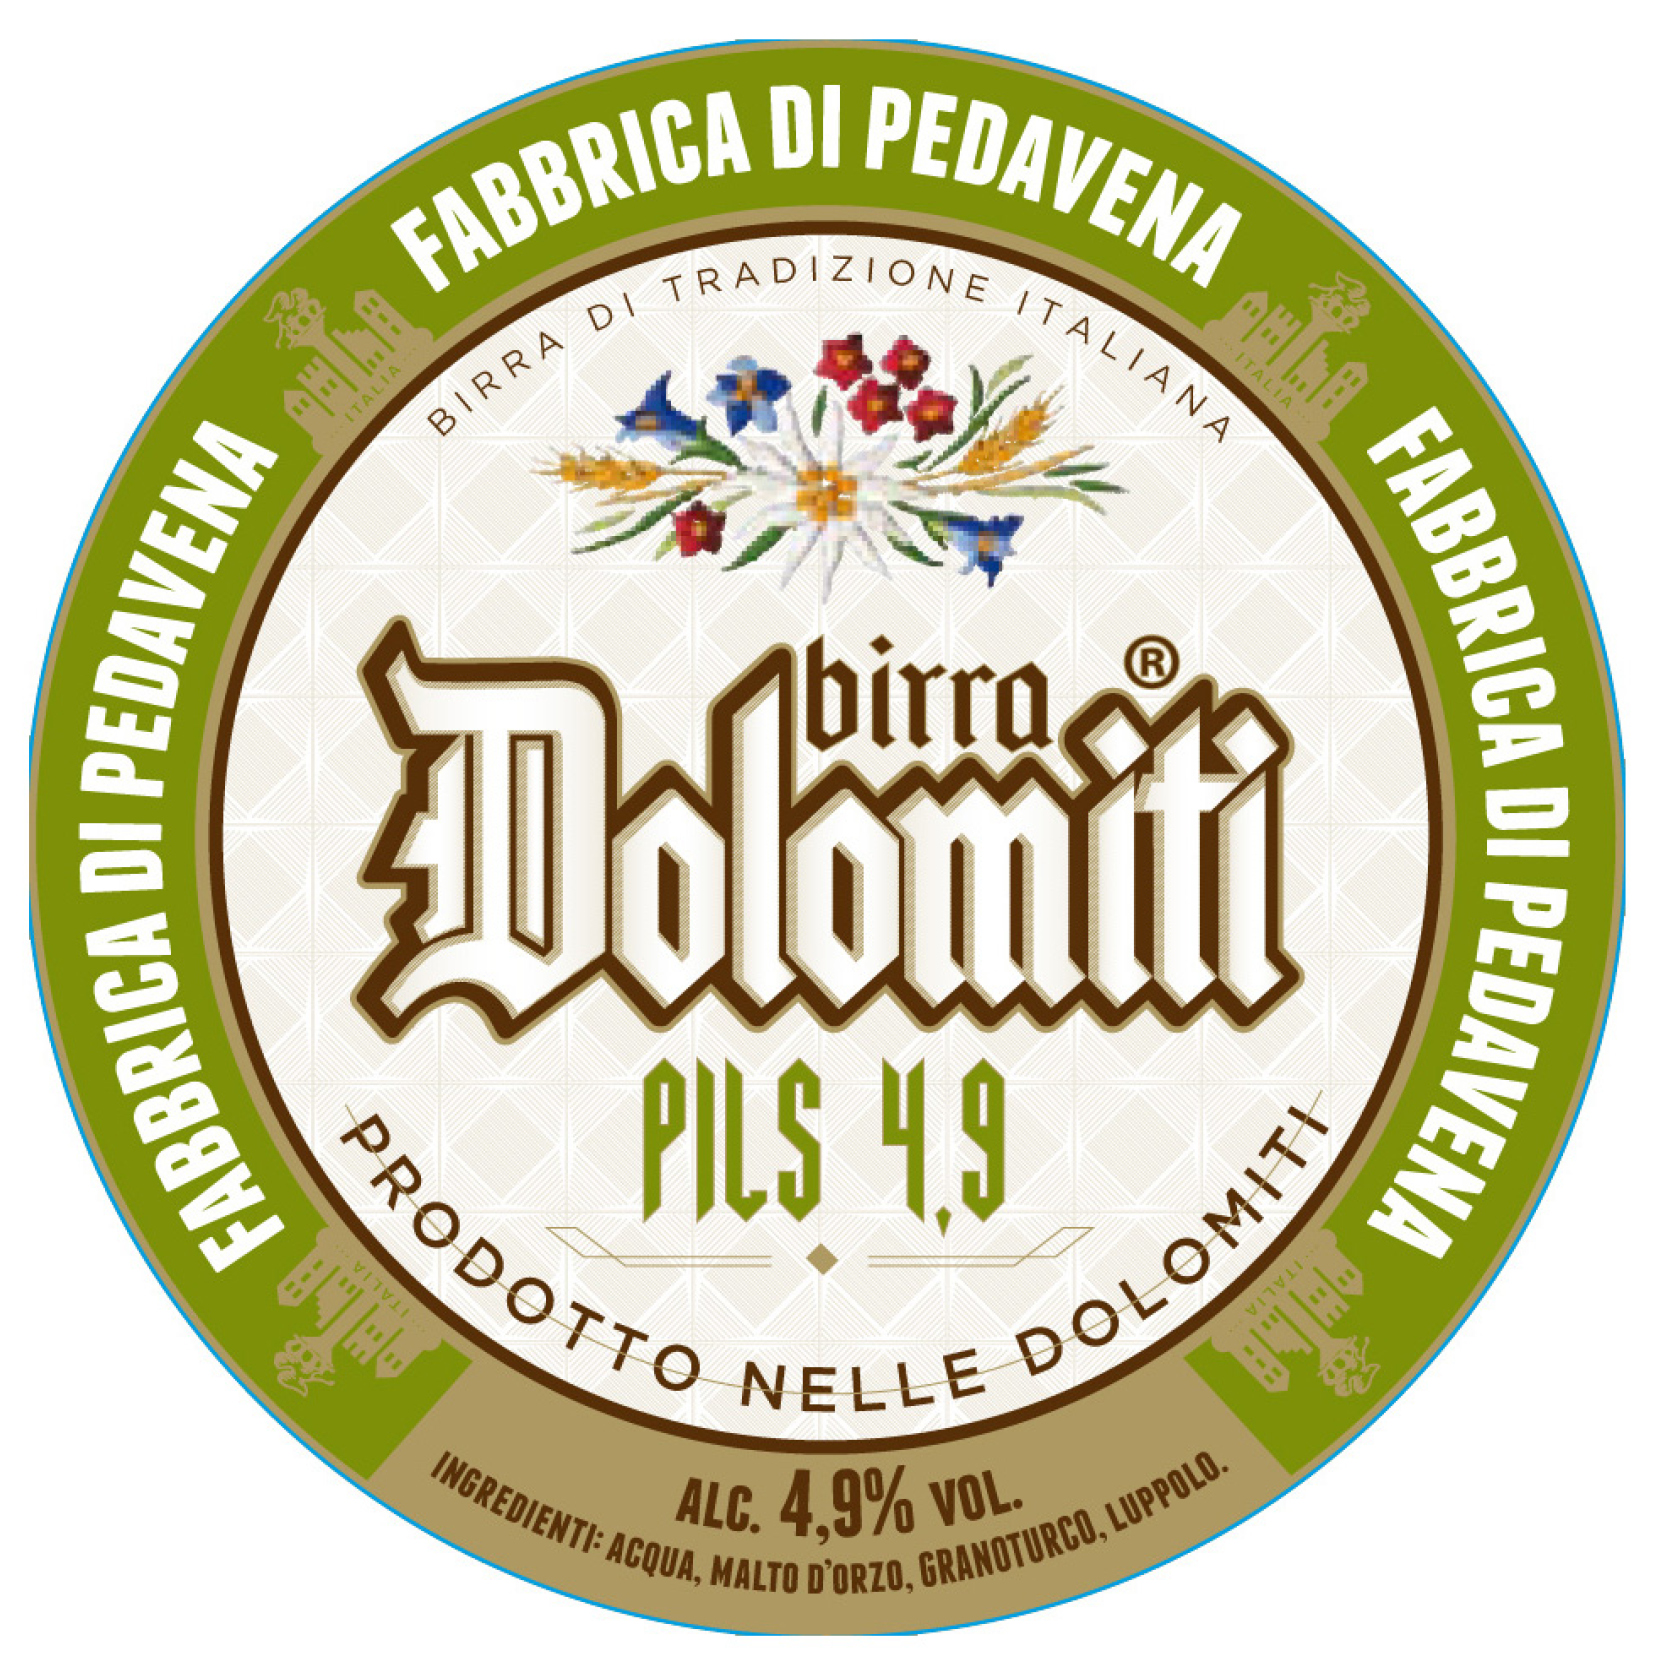 Birra Dolomiti Pils 4.9 Fabbrica in Pedavena - Ristorante Pizzeria Pub Birreria Fabbrica di Pedavena Lissone